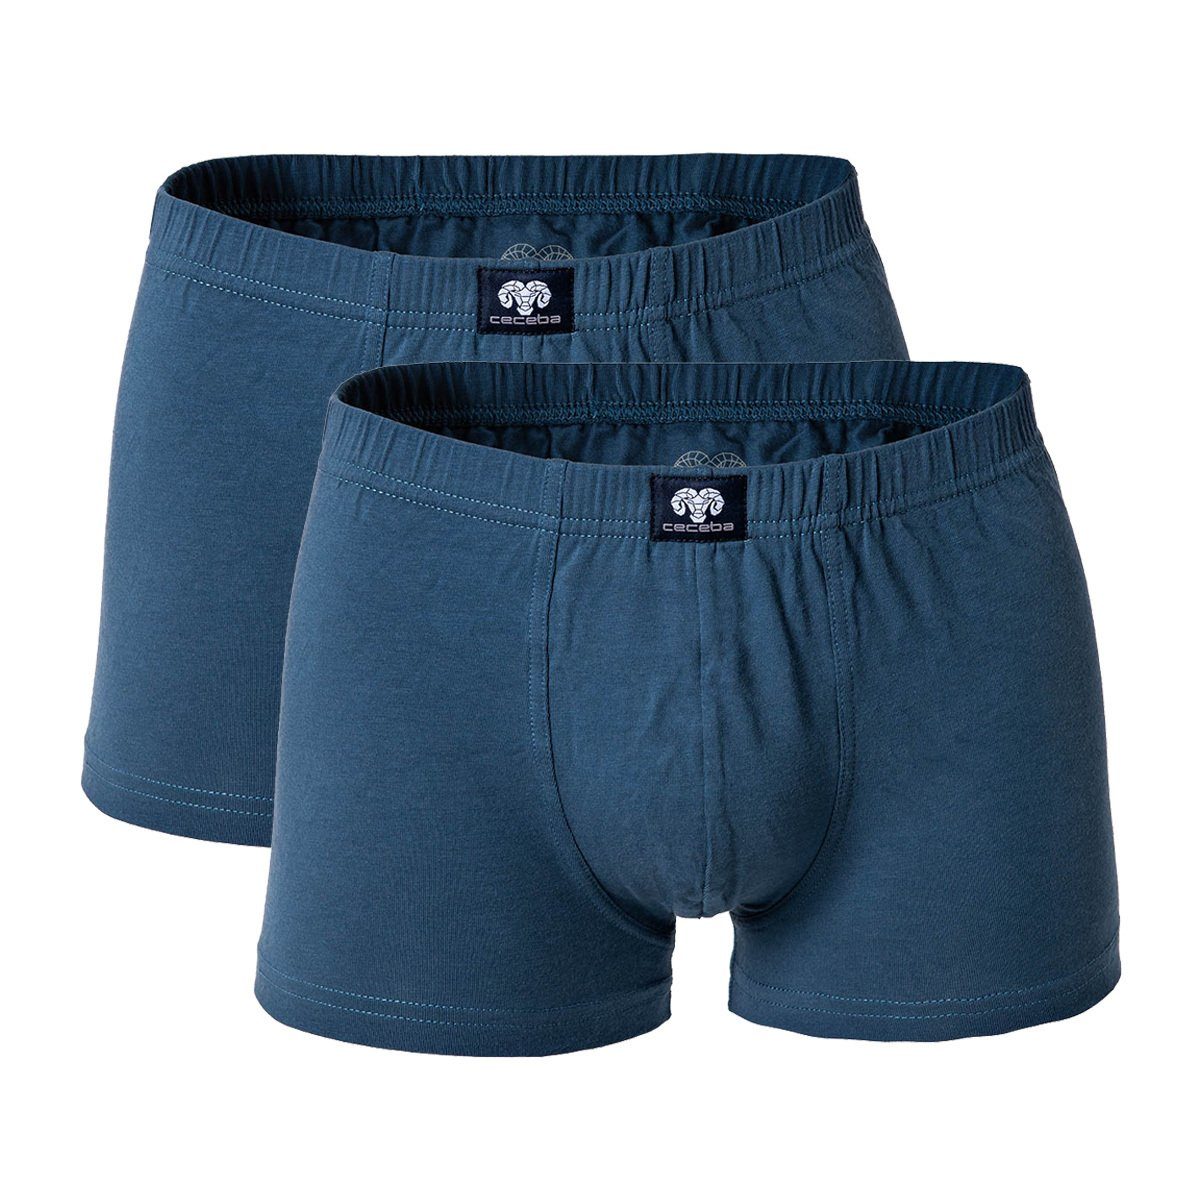 CECEBA Boxer Herren Shorts, 2er Pack - Short Pants, Basic Blau